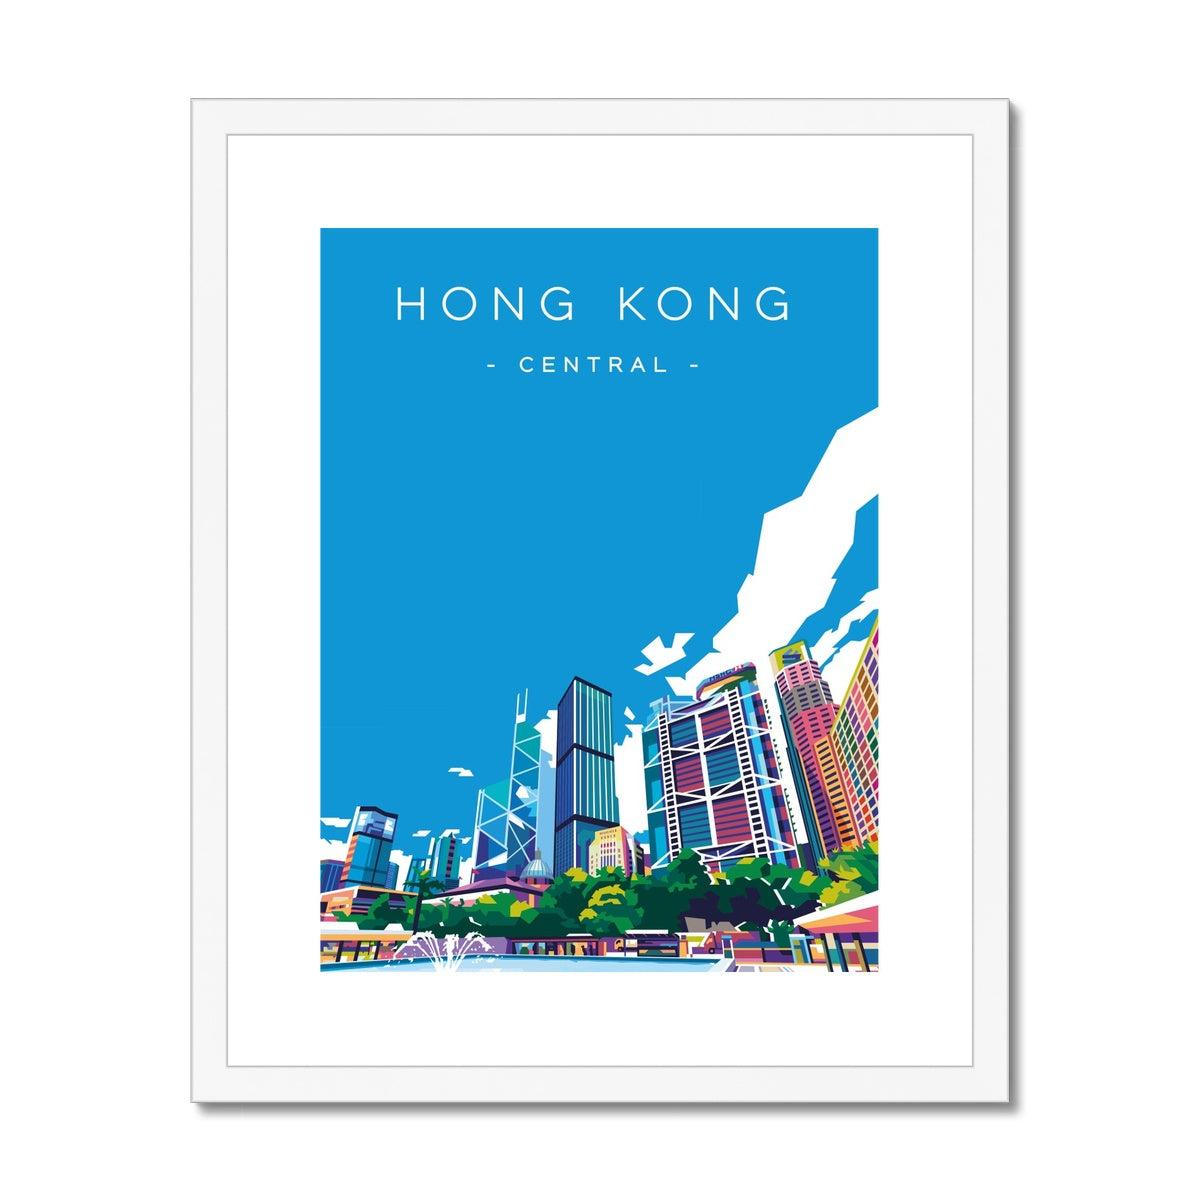 Hong Kong Travel - Central Framed & Mounted Print